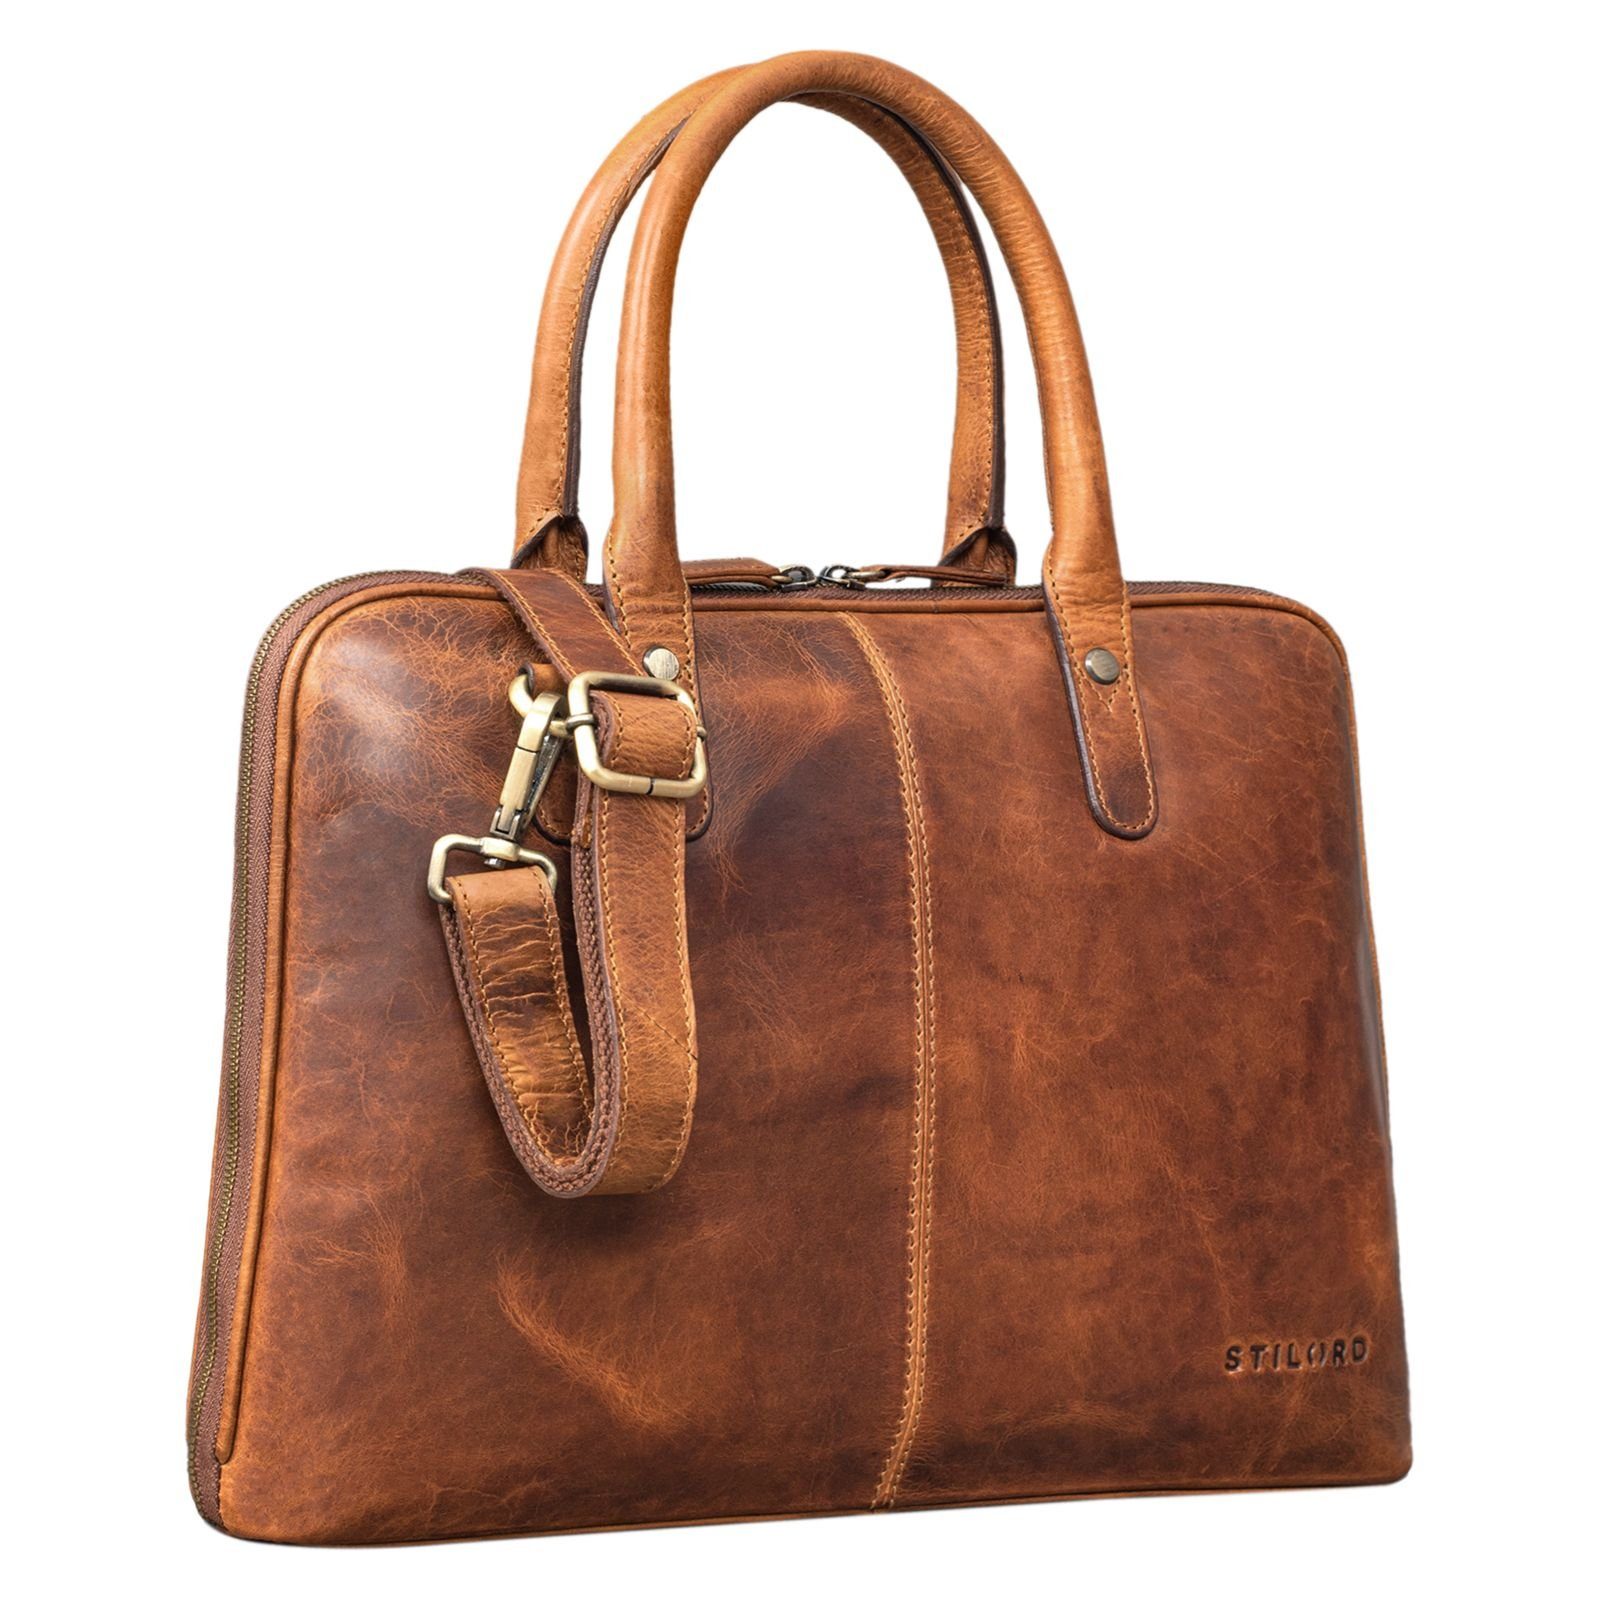 "Jolie" kara cognac Leder Handtasche Tasche STILORD Business Frauen -